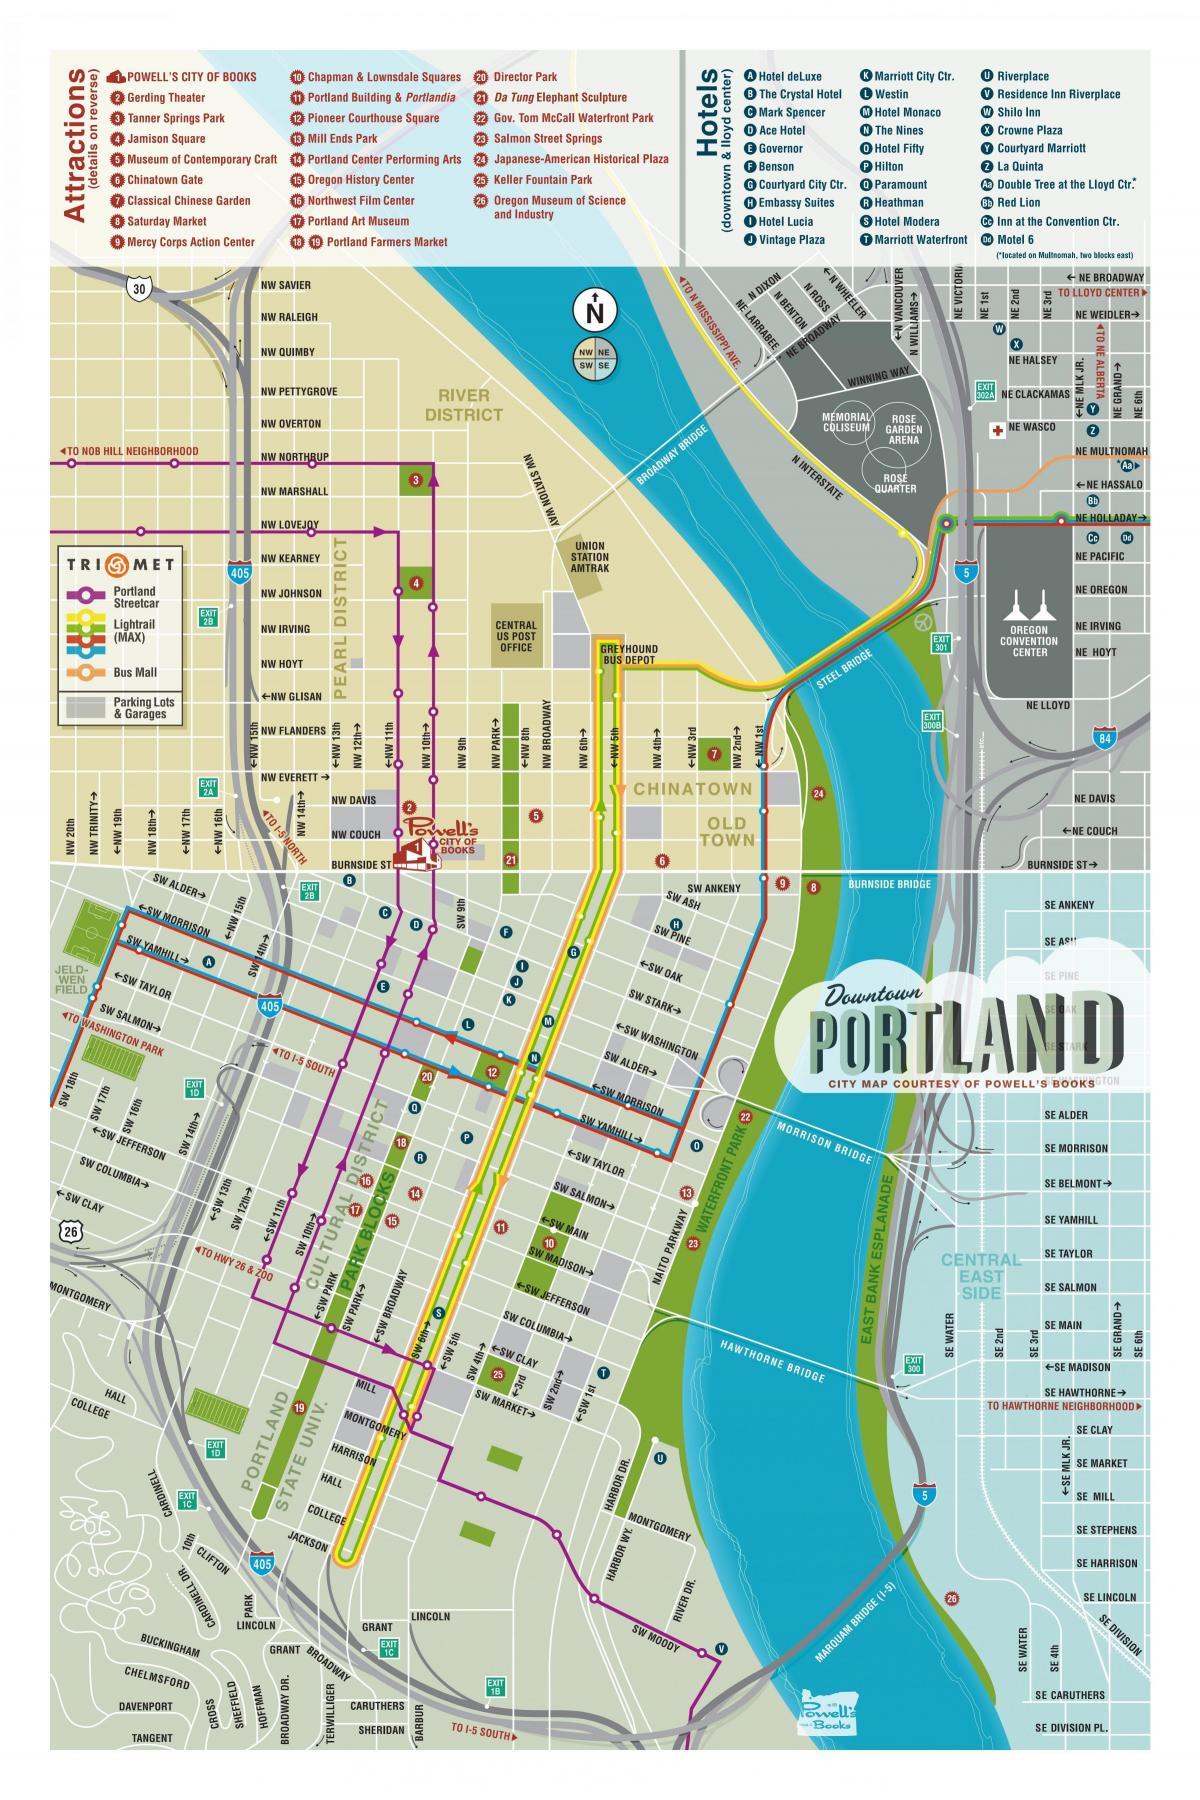 Portland harta obiectivelor turistice